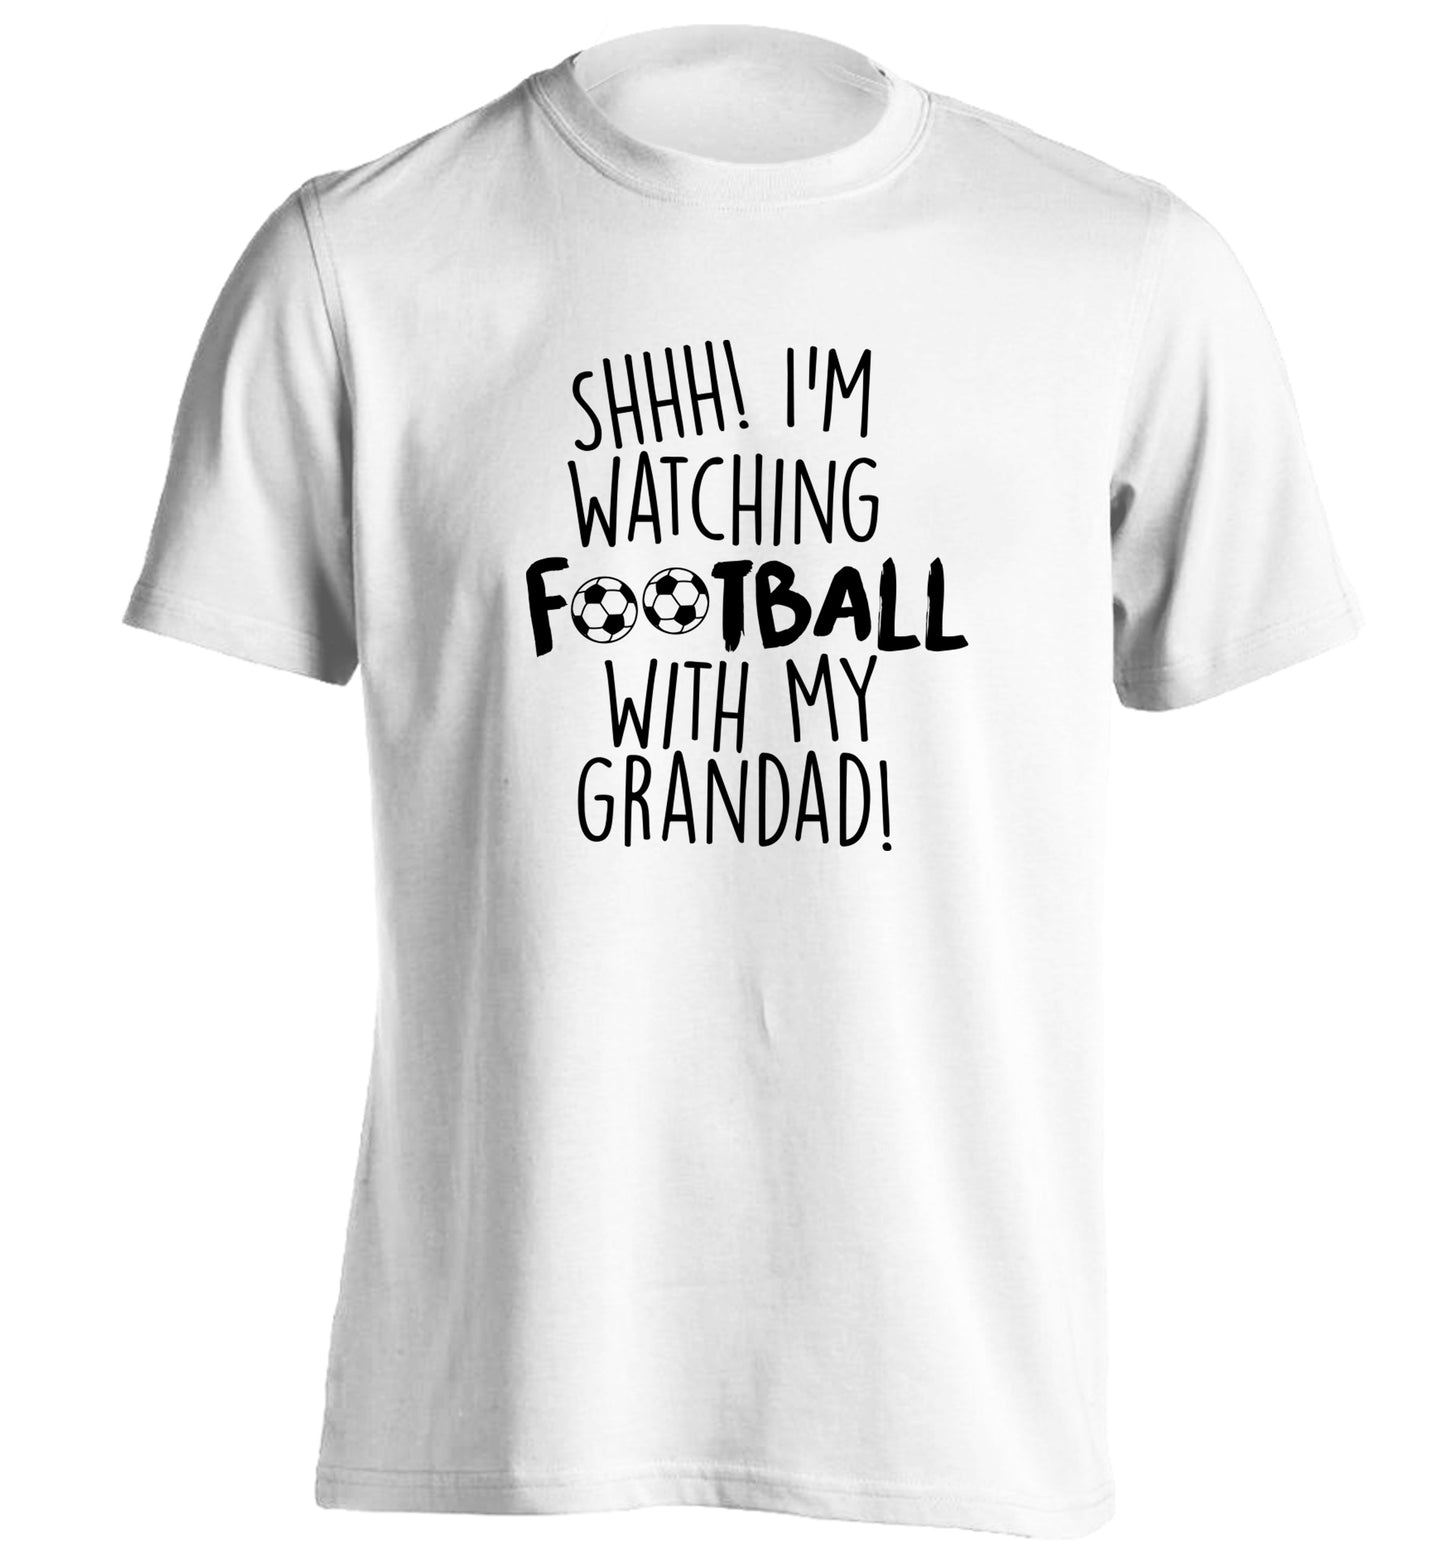 Shhh I'm watching football with my grandad adults unisexwhite Tshirt 2XL